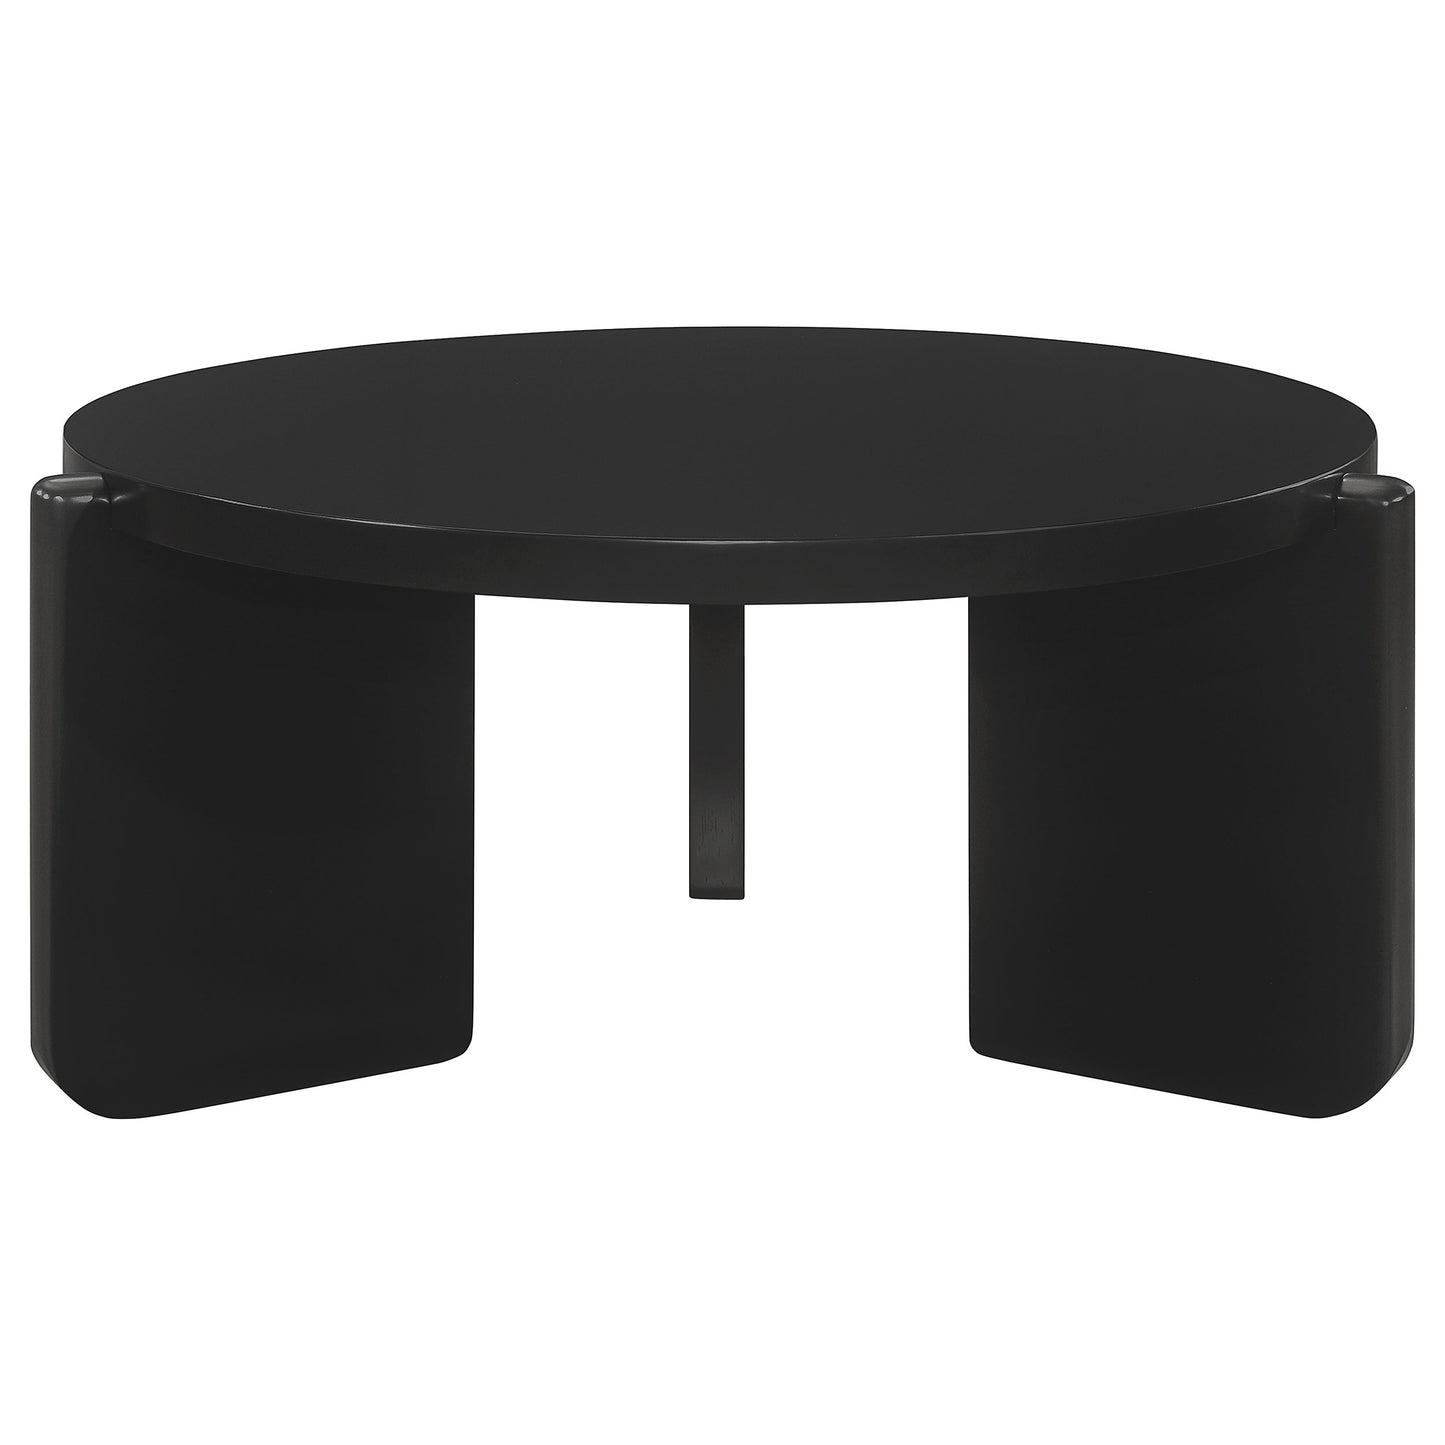 Cordova Round Solid Wood Coffee Table Black